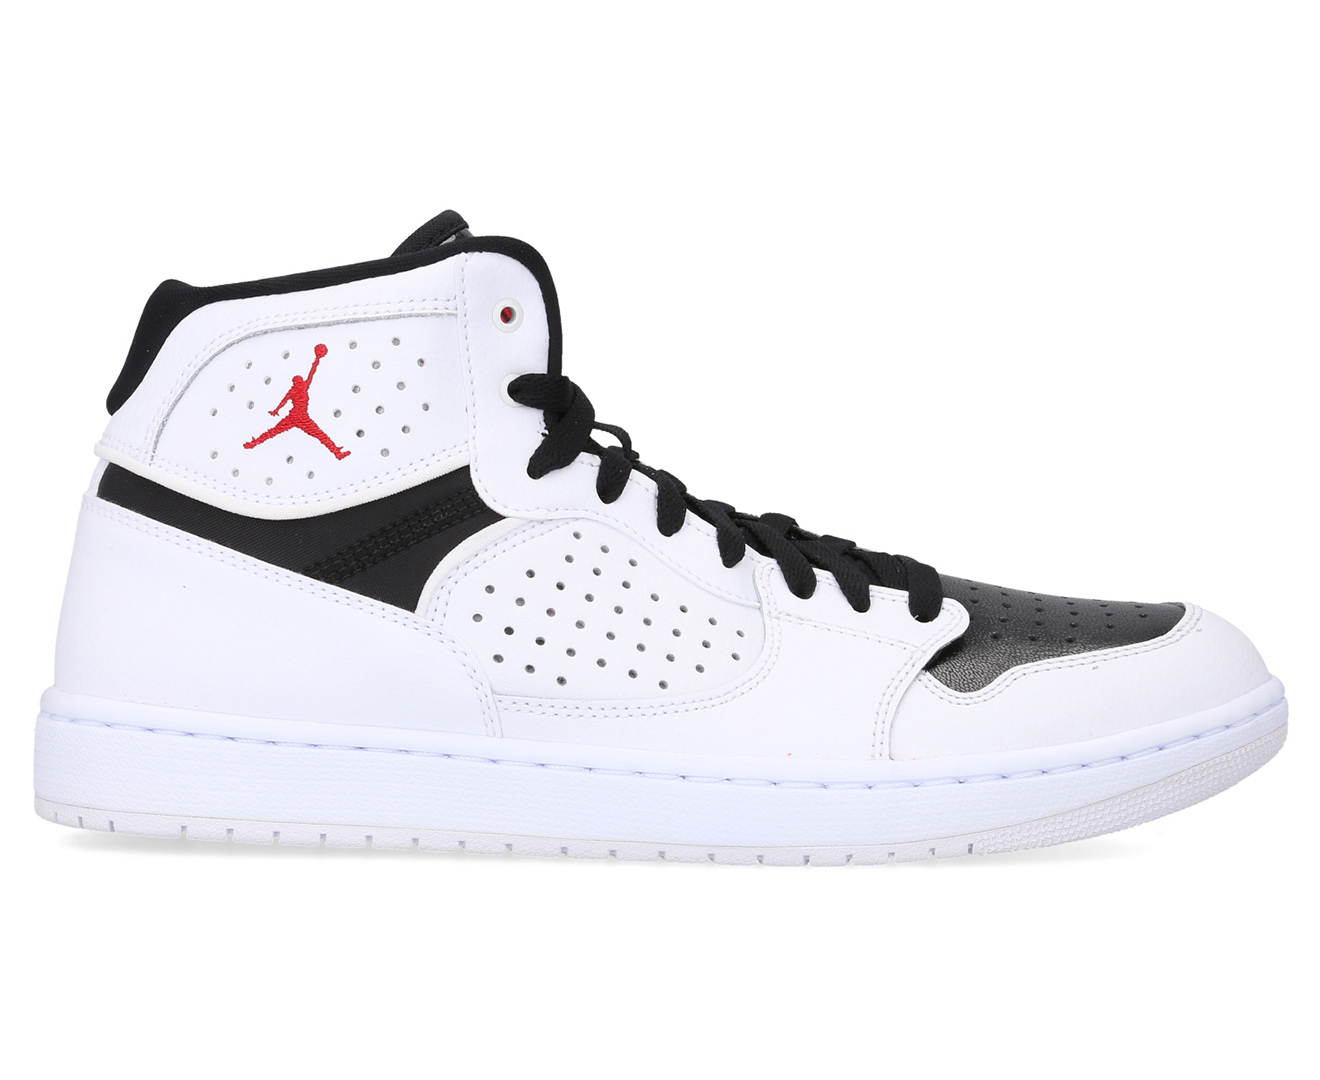 Nike Men's Jordan Access Sneakers - White/Gym Red/Black | Catch.co.nz